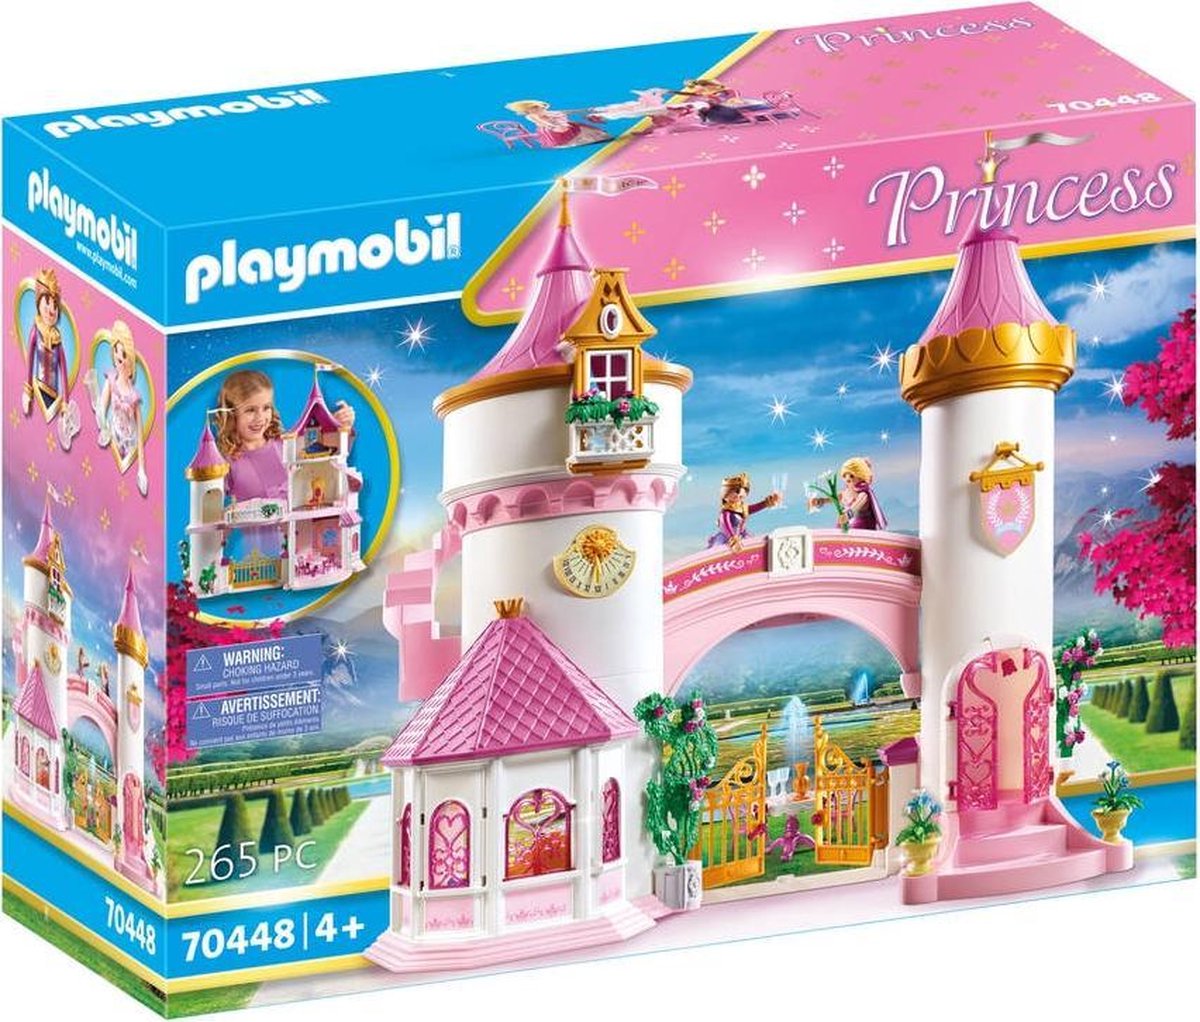 Playmobil Princess Prinsessenkasteel Mini (70448)